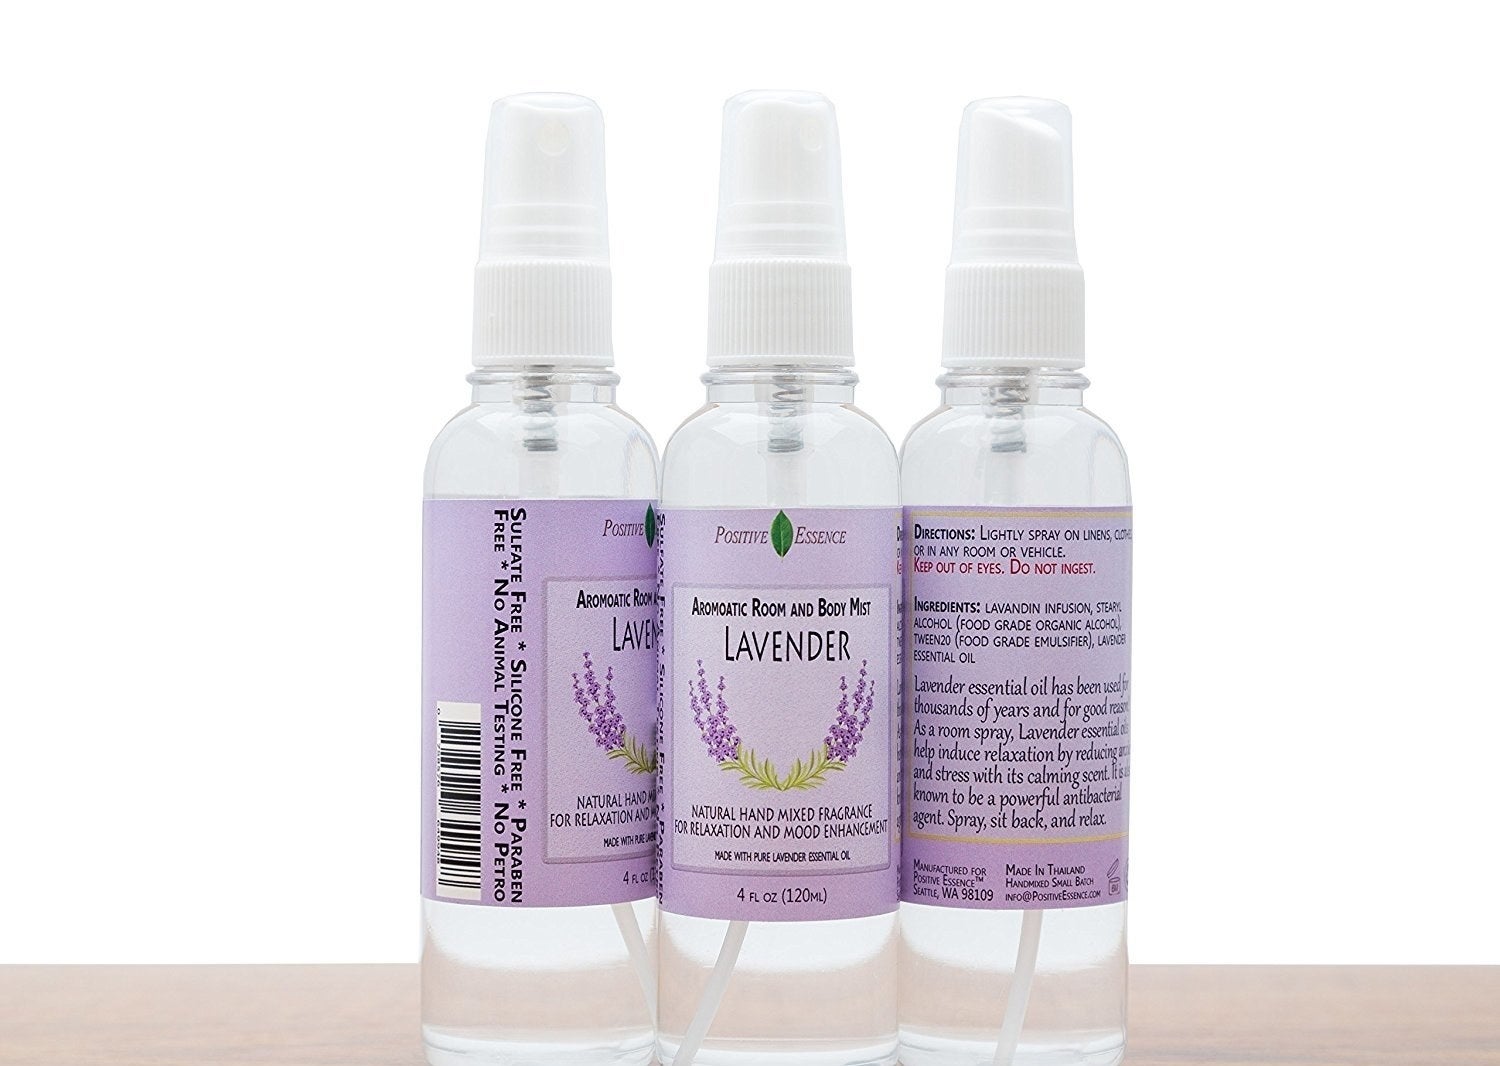 three bottles of the lavender aromatic mist